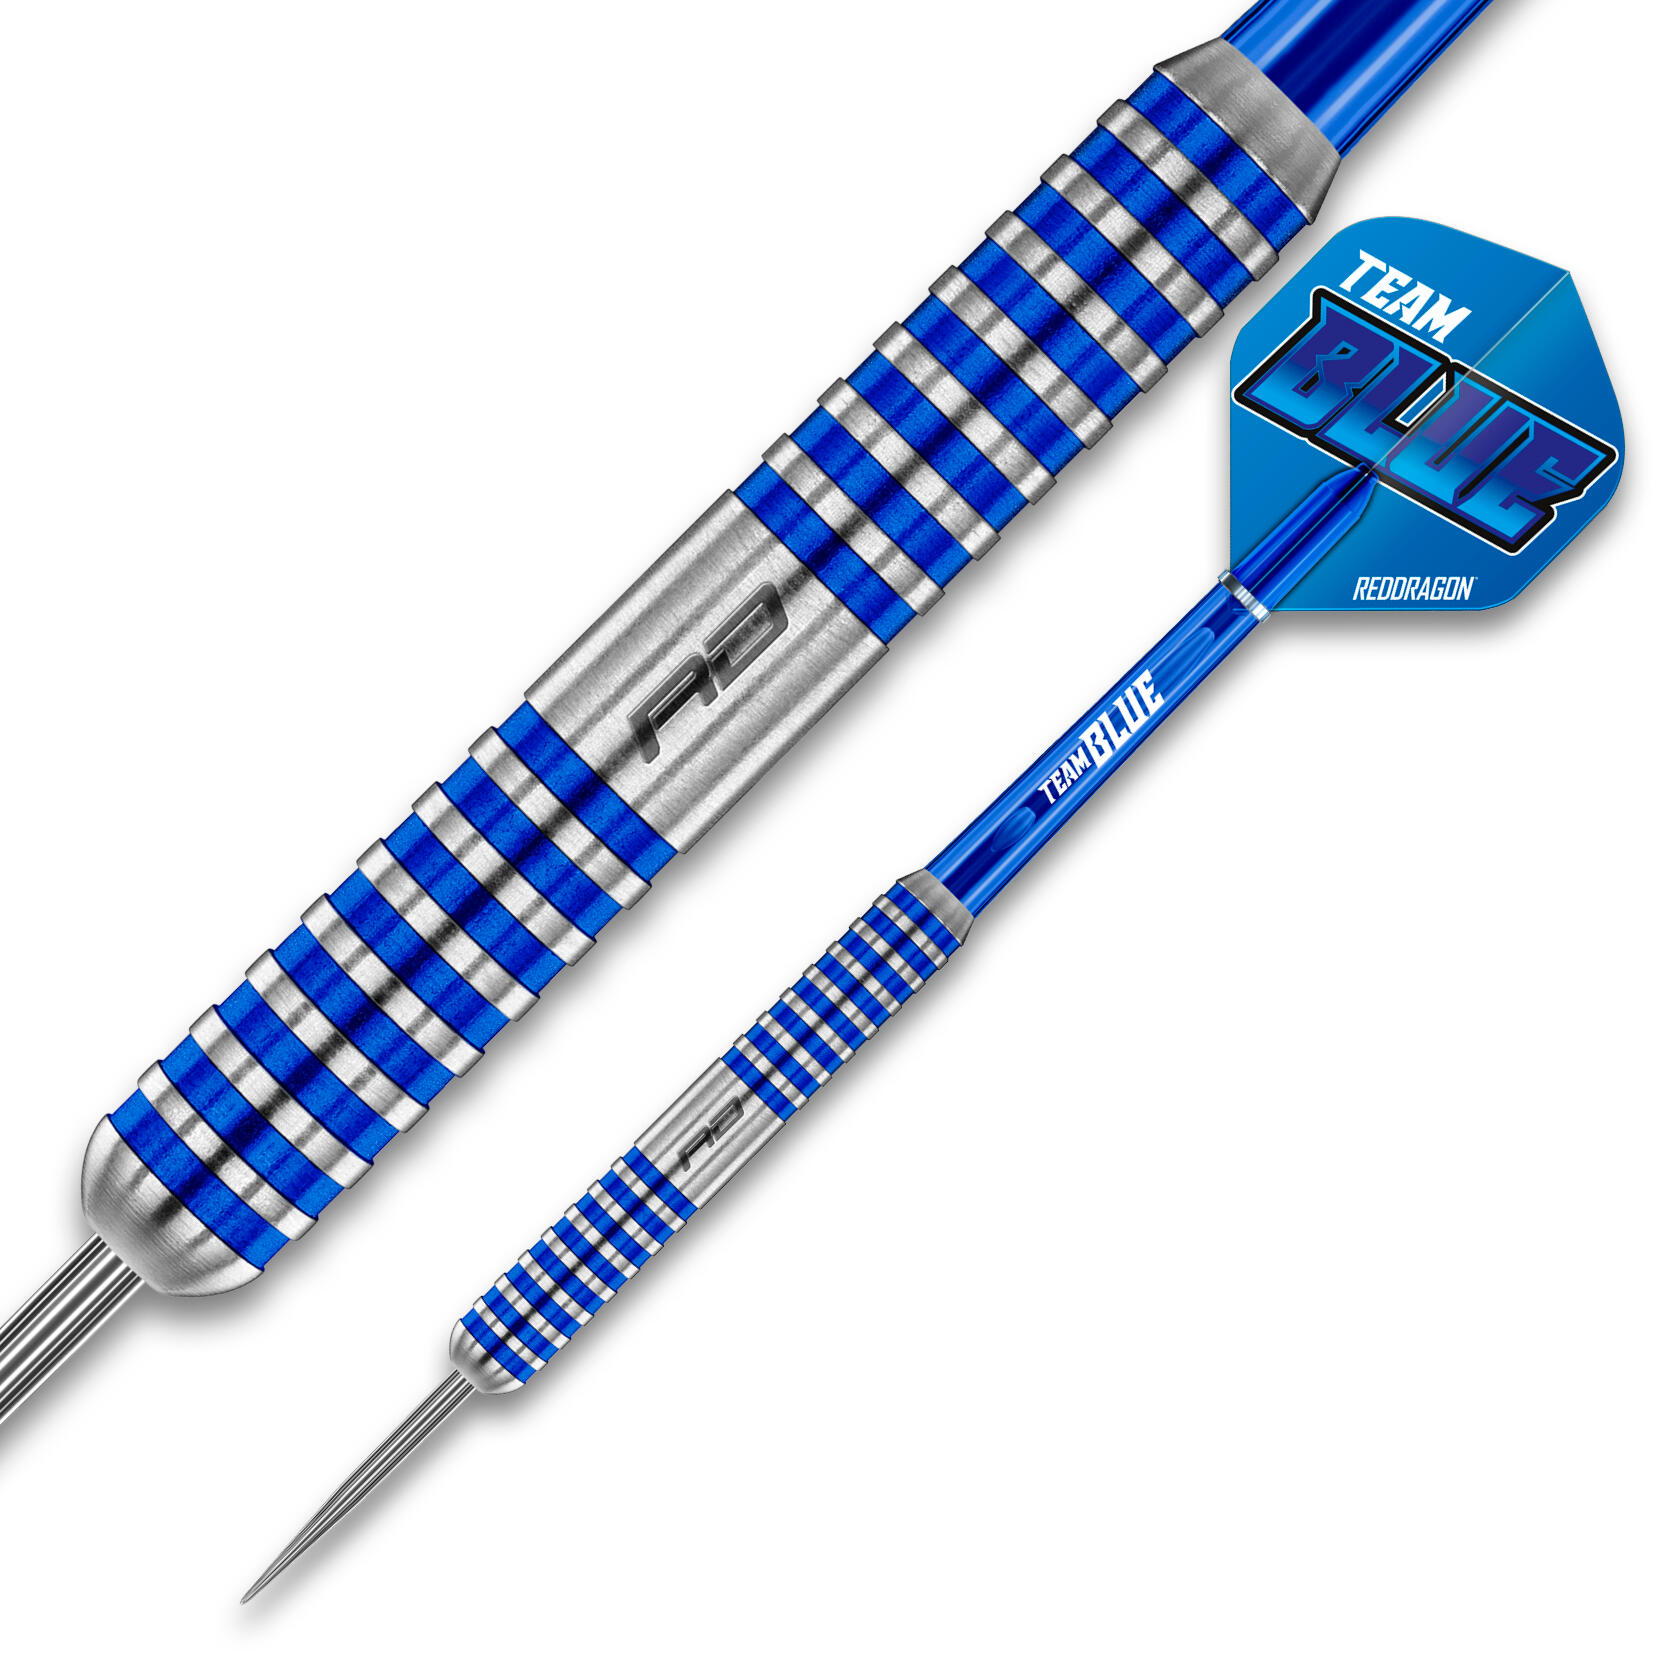 Team Red v Team Blue Tungsten Professional Darts Set with Flights & Shafts 3/6